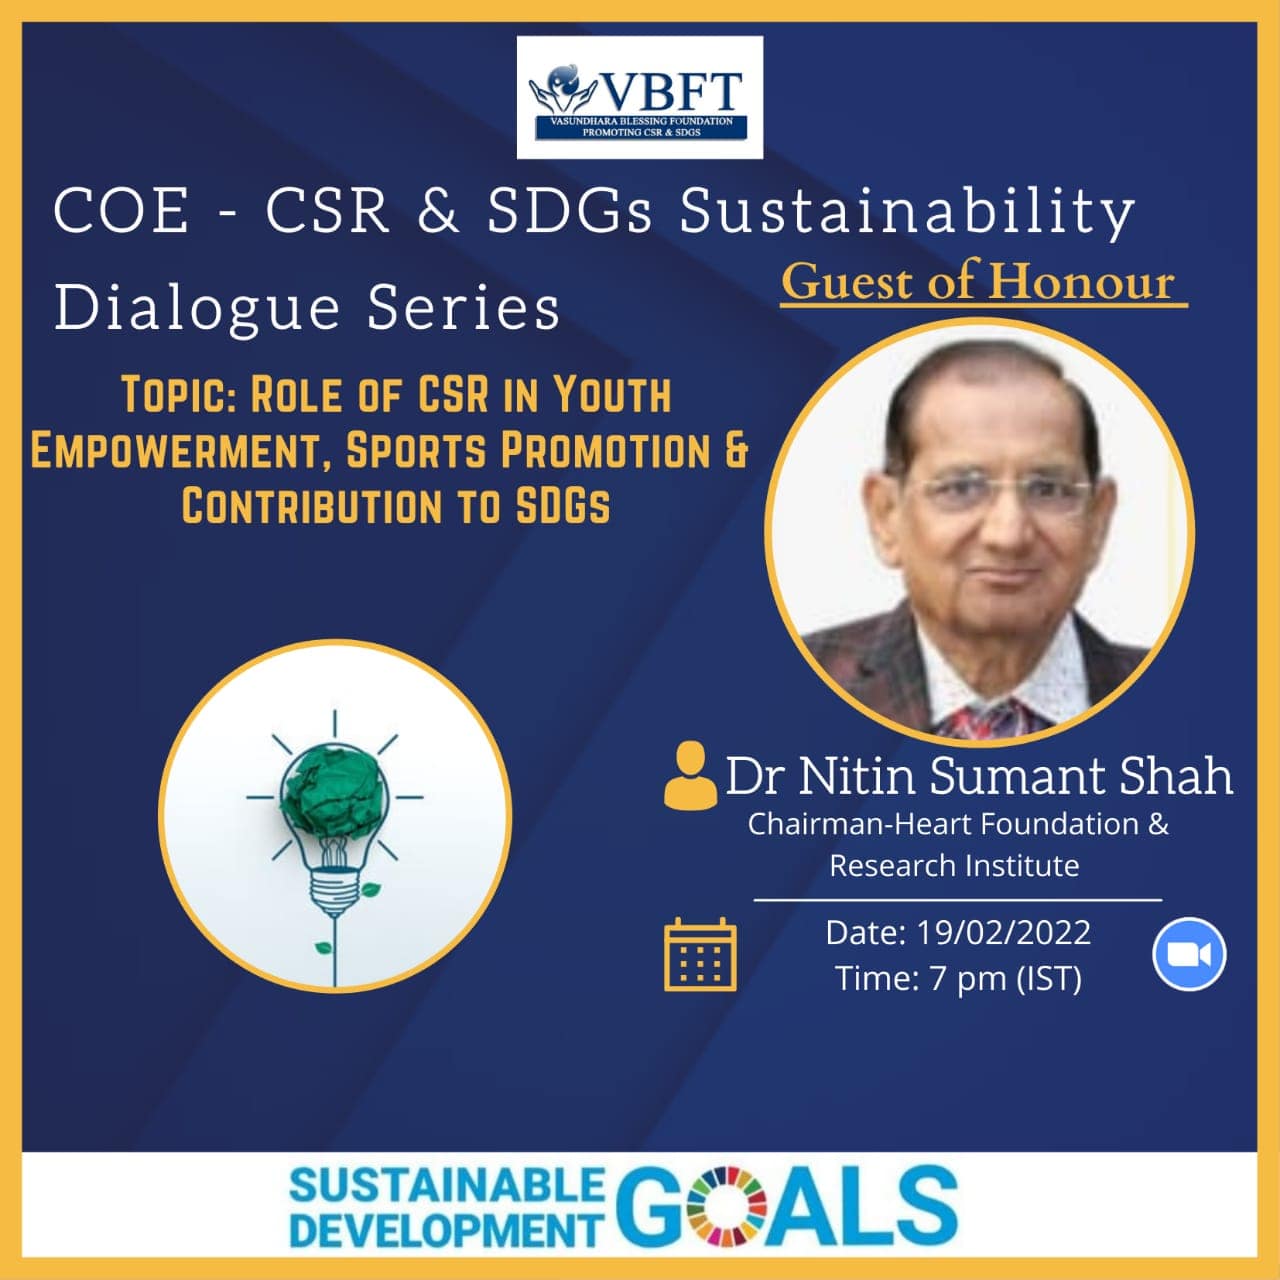 COE- CSR & SDGS dialogues & partnership series